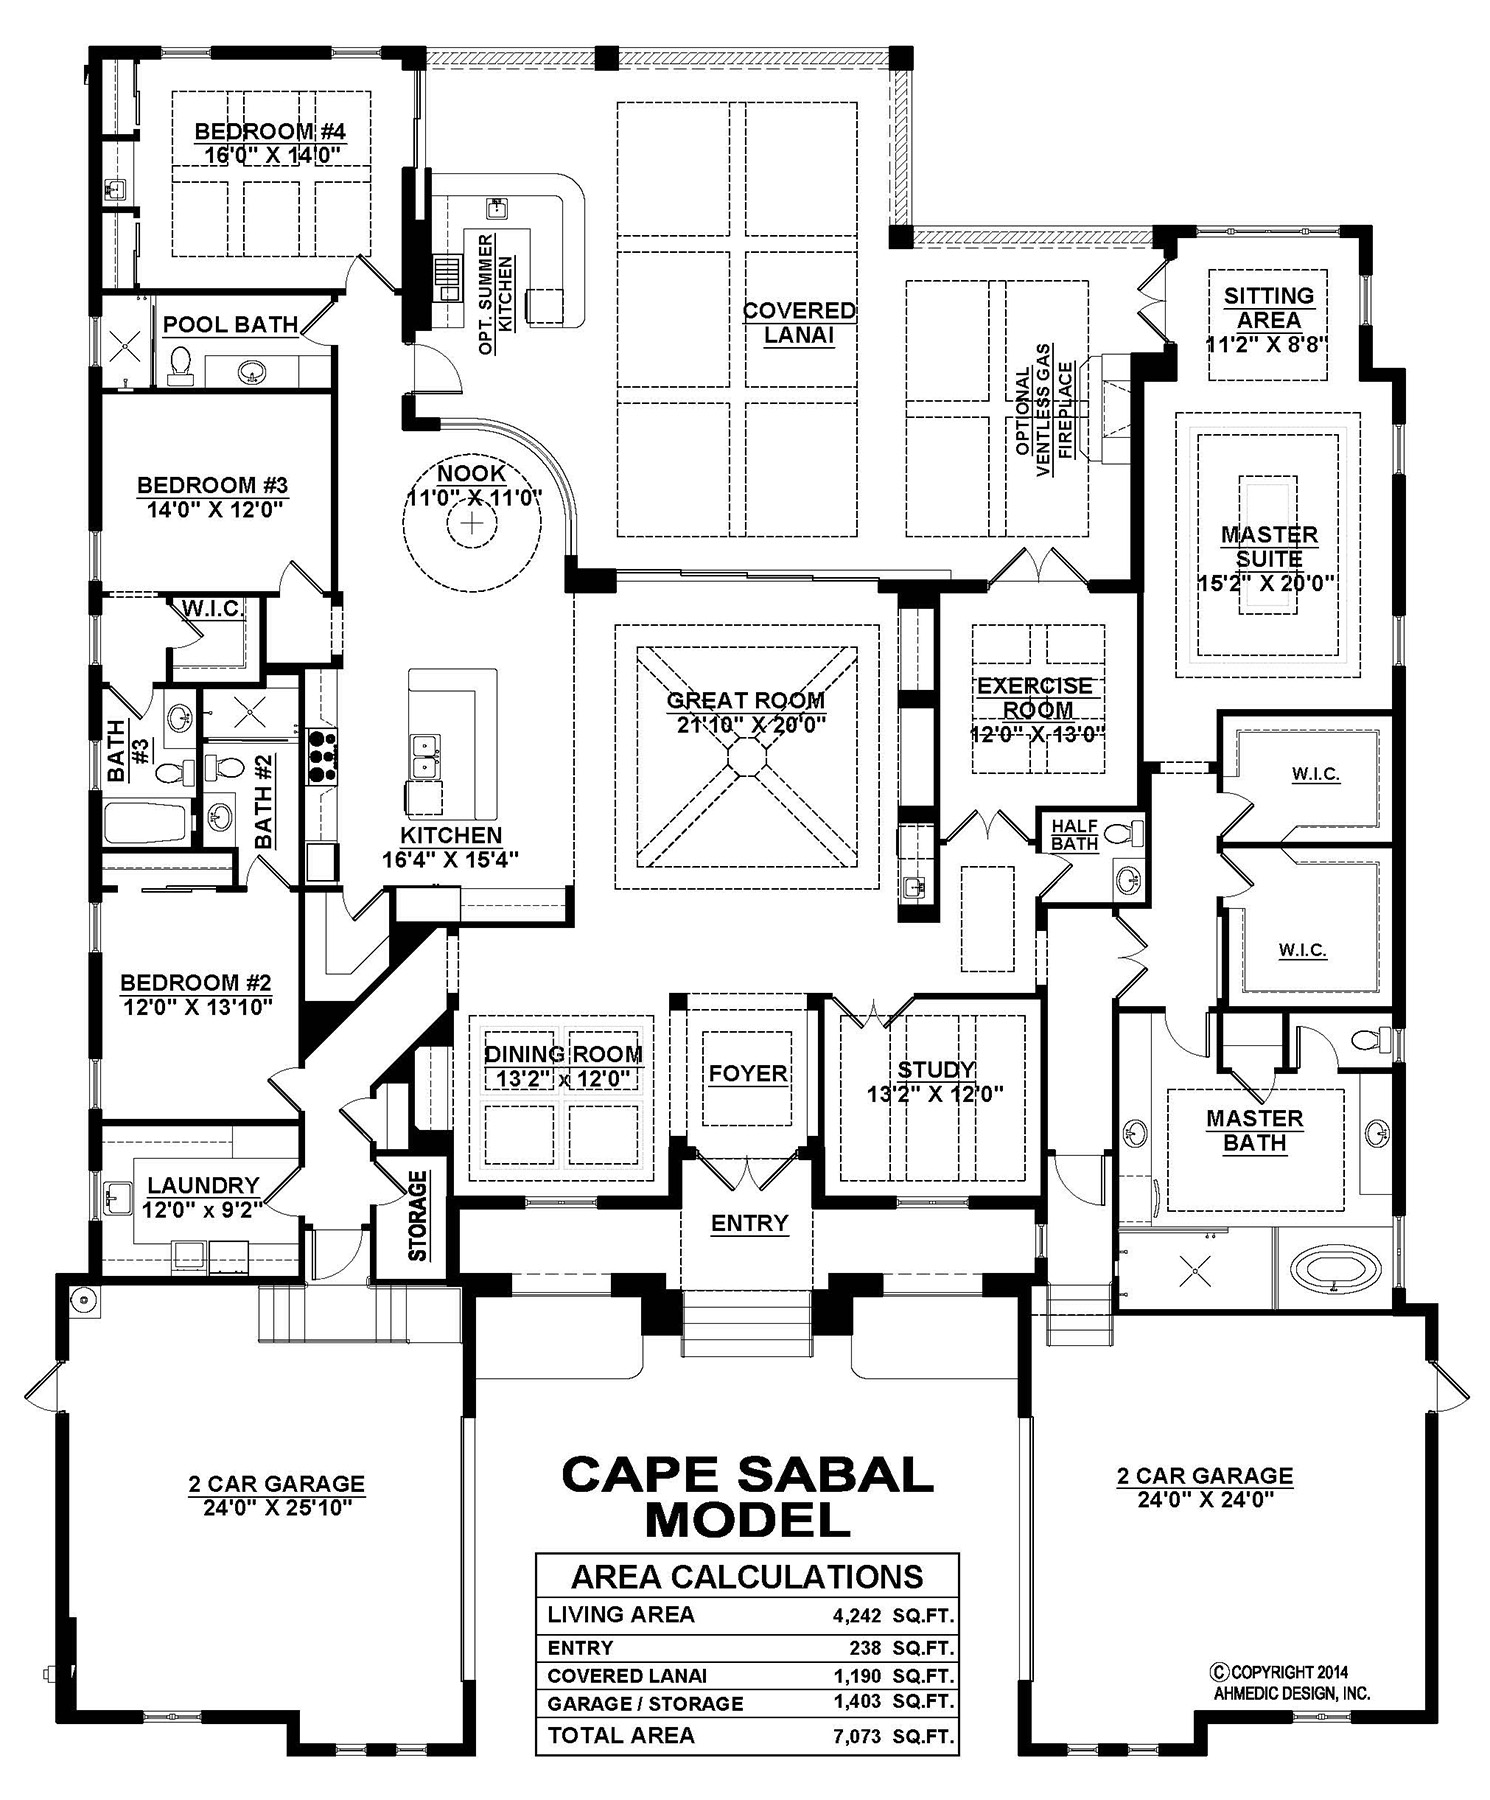 Cape-sabal Floor Plan